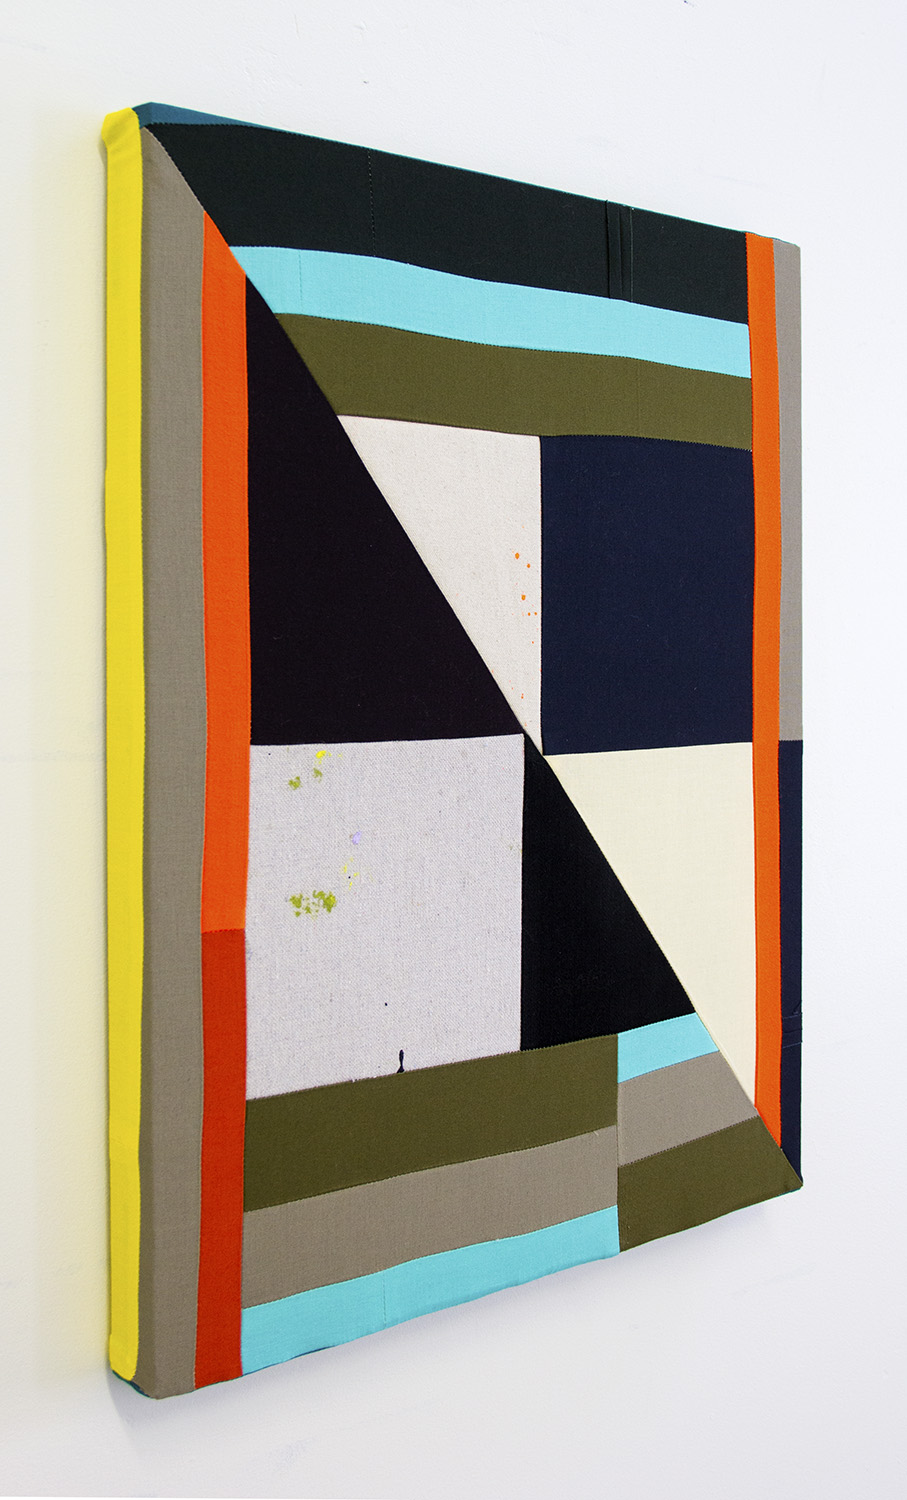    of Color, No. 3 (side view)   ,  2019 Sewn canvas, cotton, Levi’s denim, acrylic 20 x 16 inches (50.8 x 40.6 cm) 